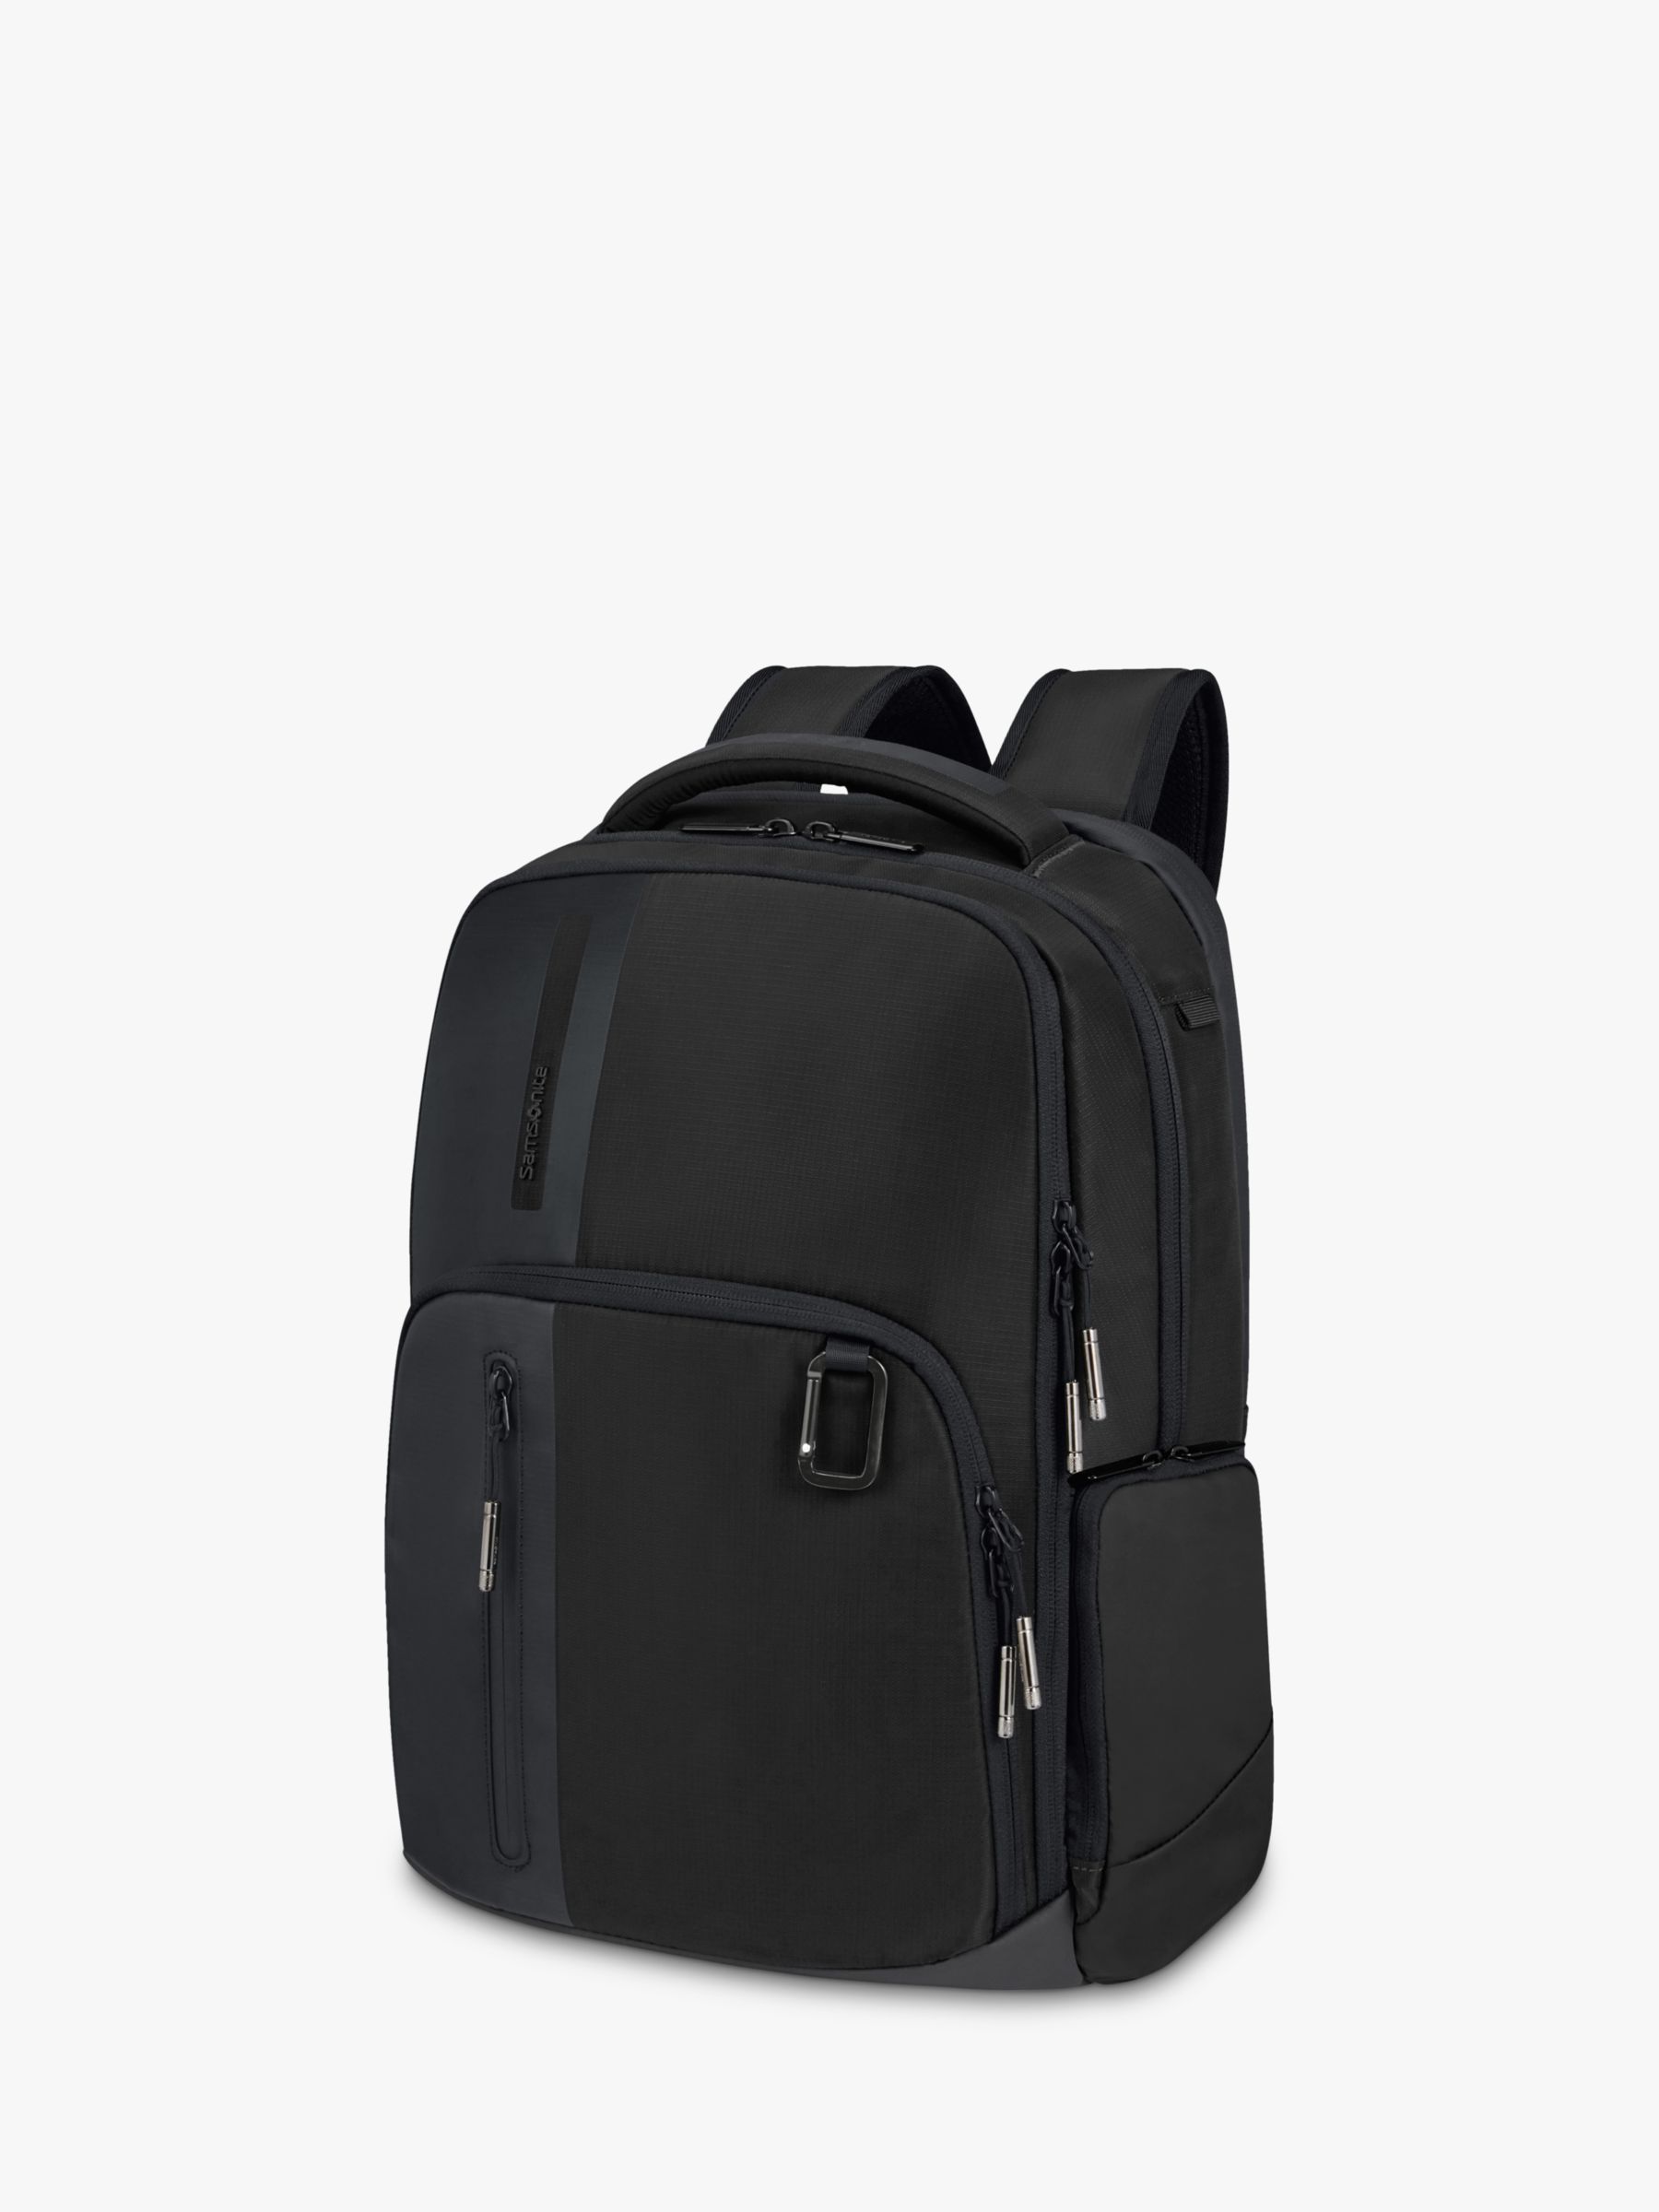 Samsonite Biz2Go Recycled Laptop Backpack, Black